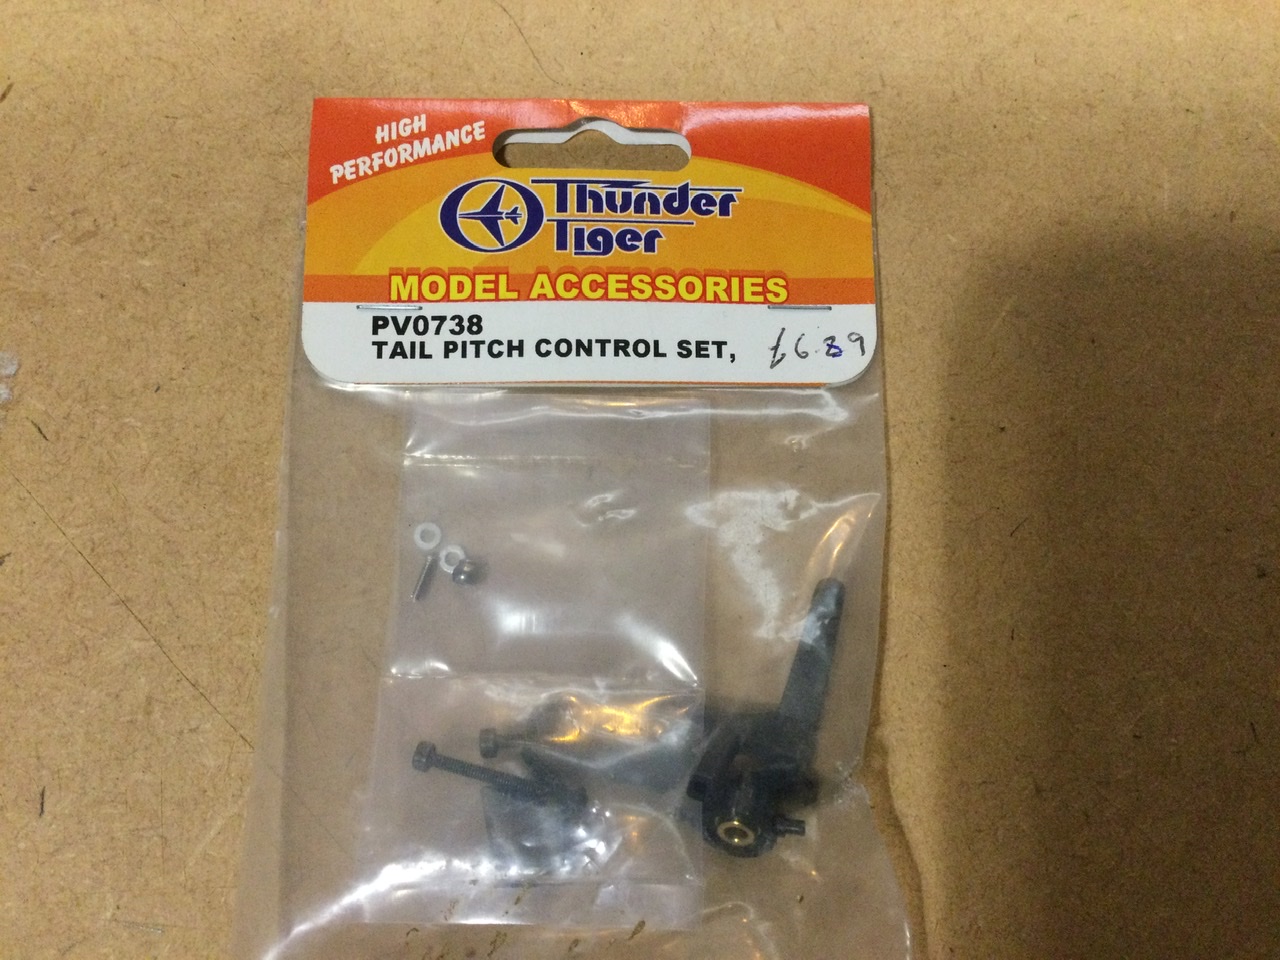 Thunder Tiger Tail Pitch Control Set PV0738